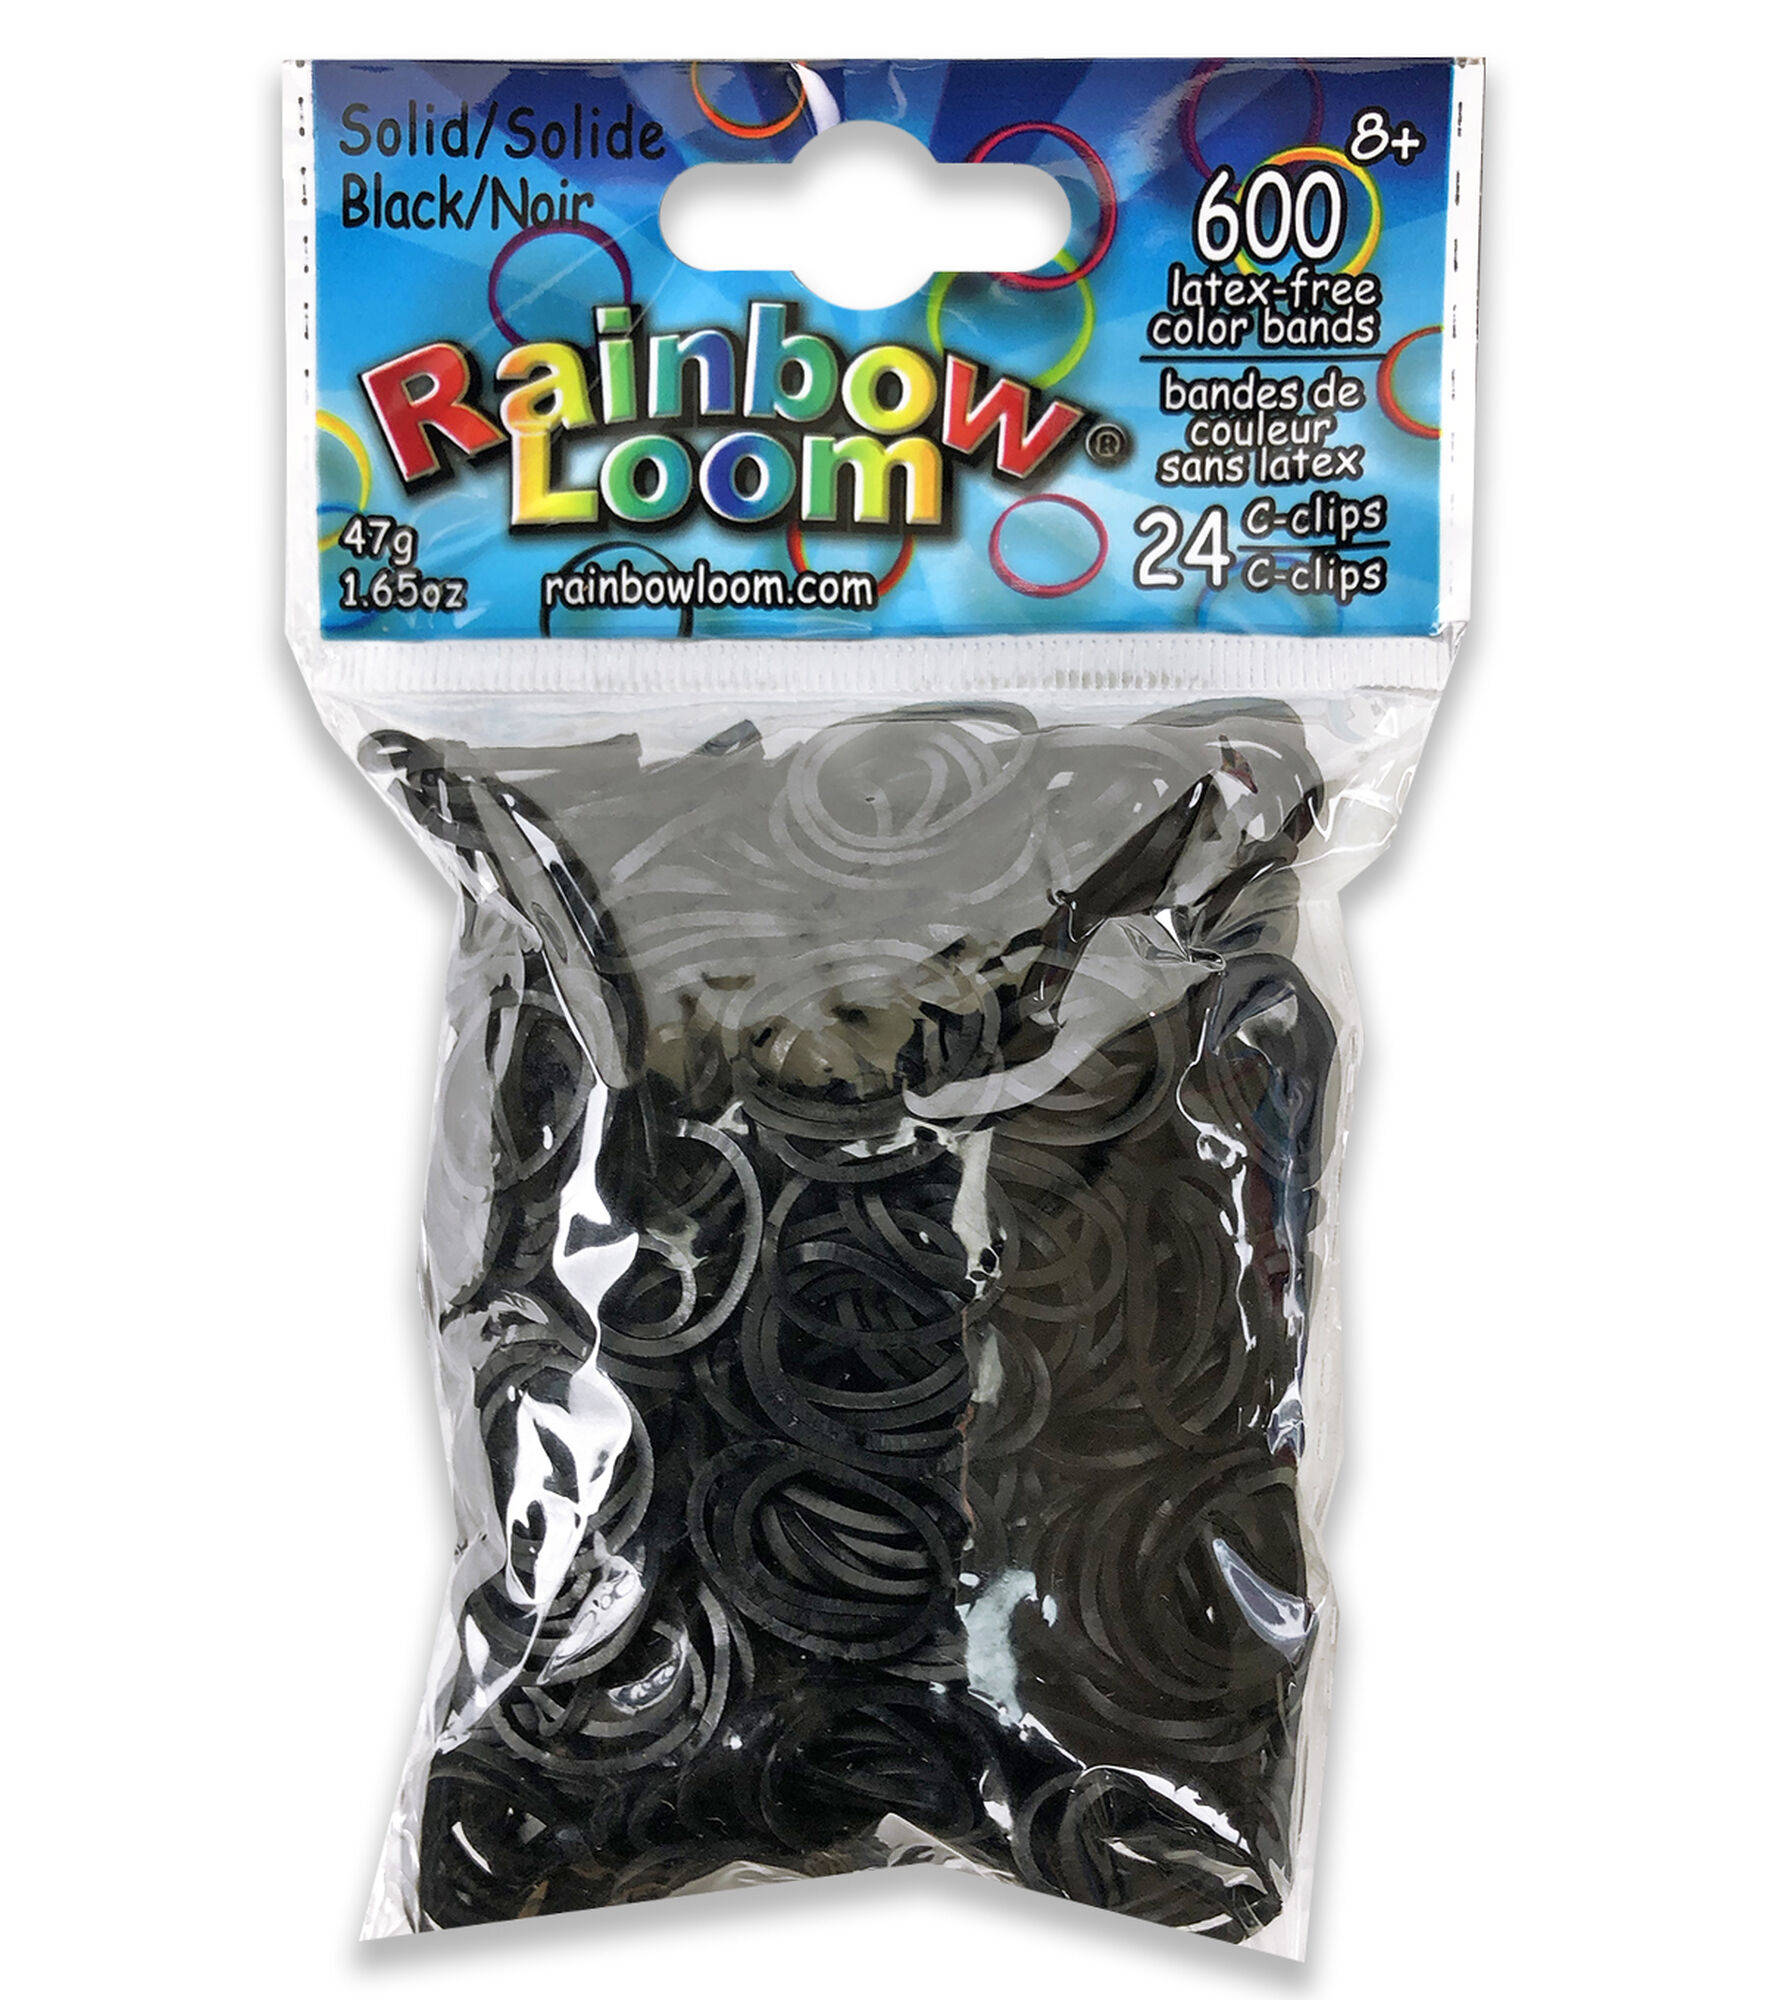 $12 for a Rubber Band Bracelet Loom Kit (a $25 Value)